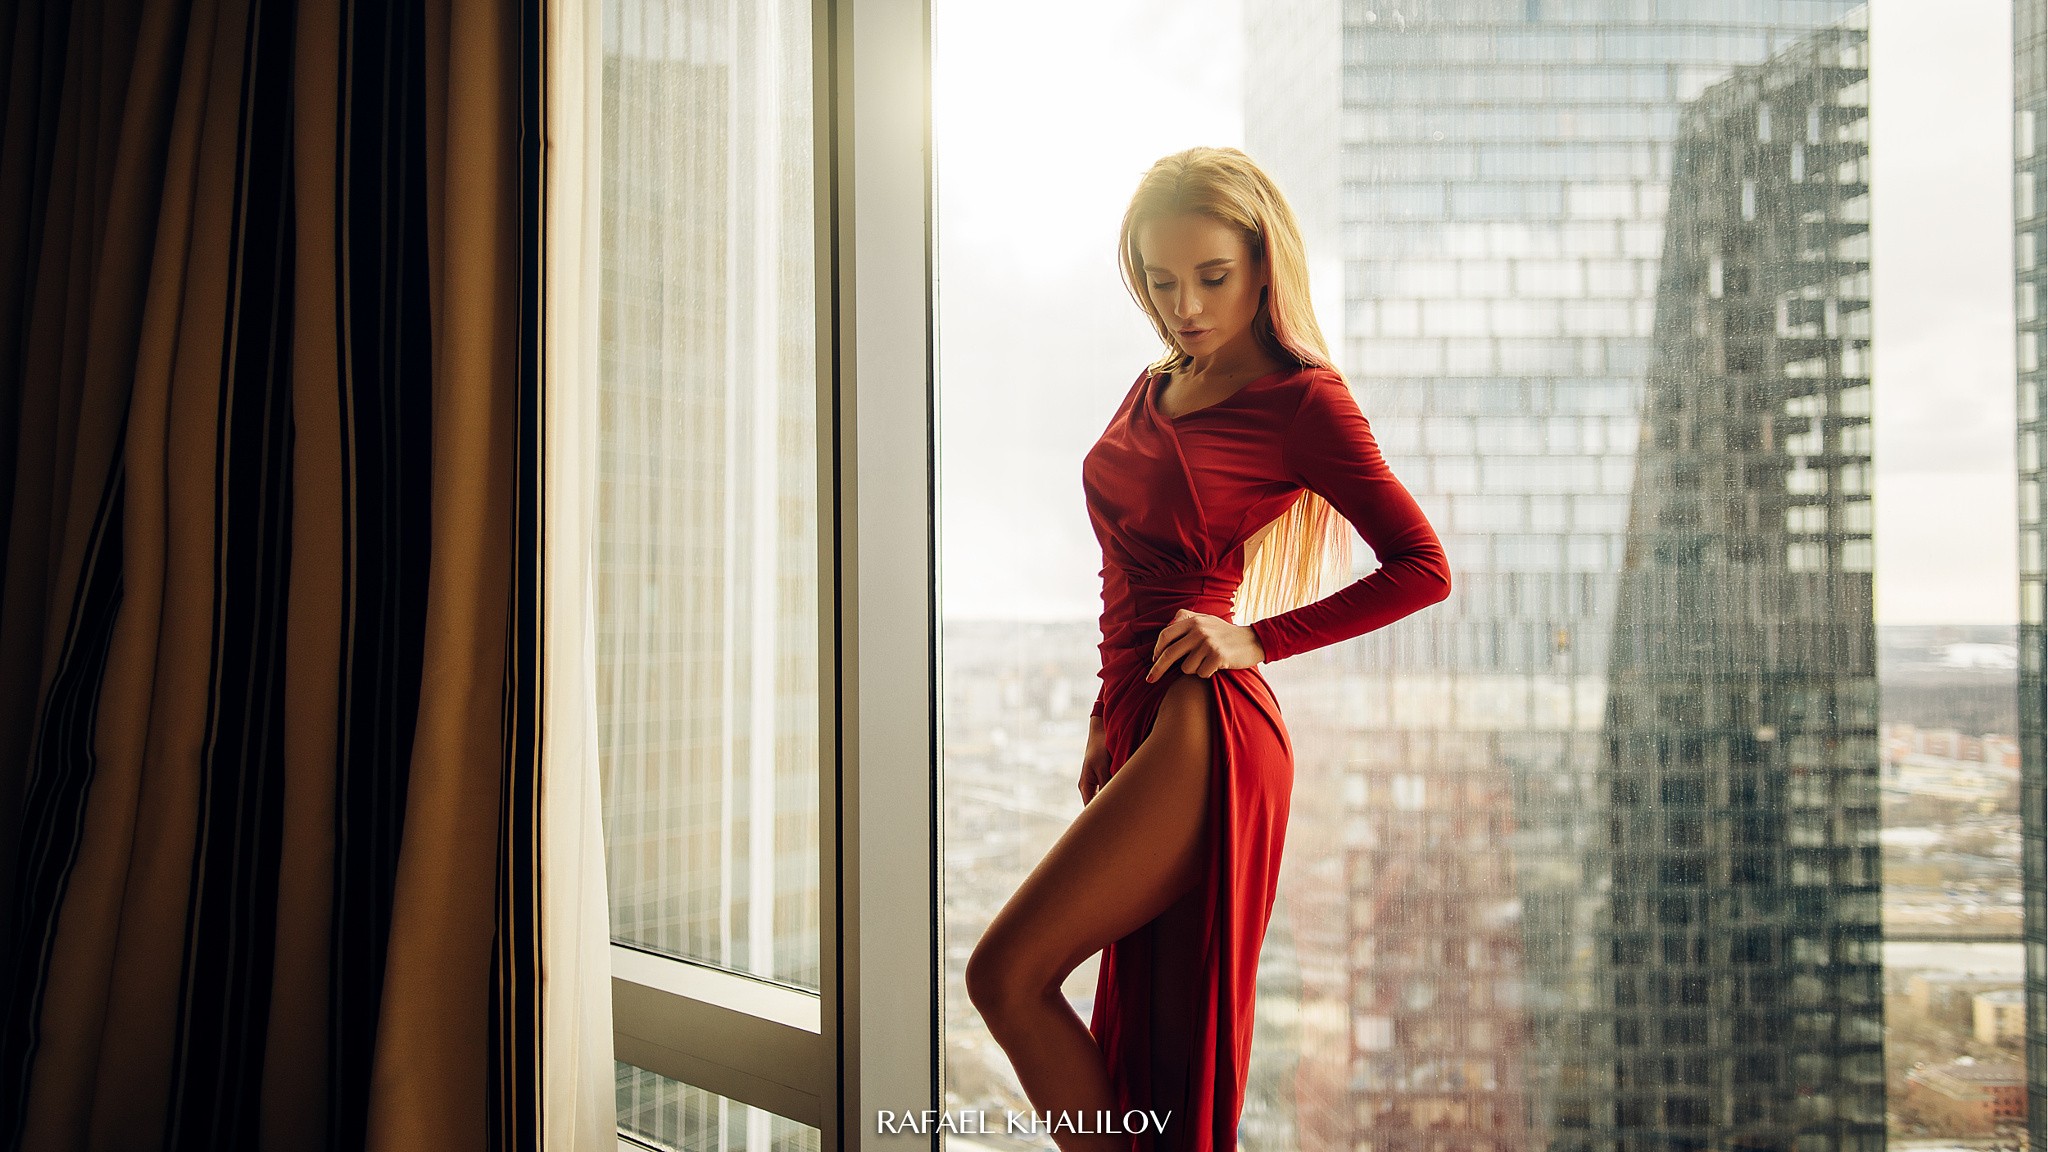 Rafael Khalilov Long Hair Women Model Dress Blonde Straight Hair Legs Ekaterina Zueva Red Dress 2048x1152